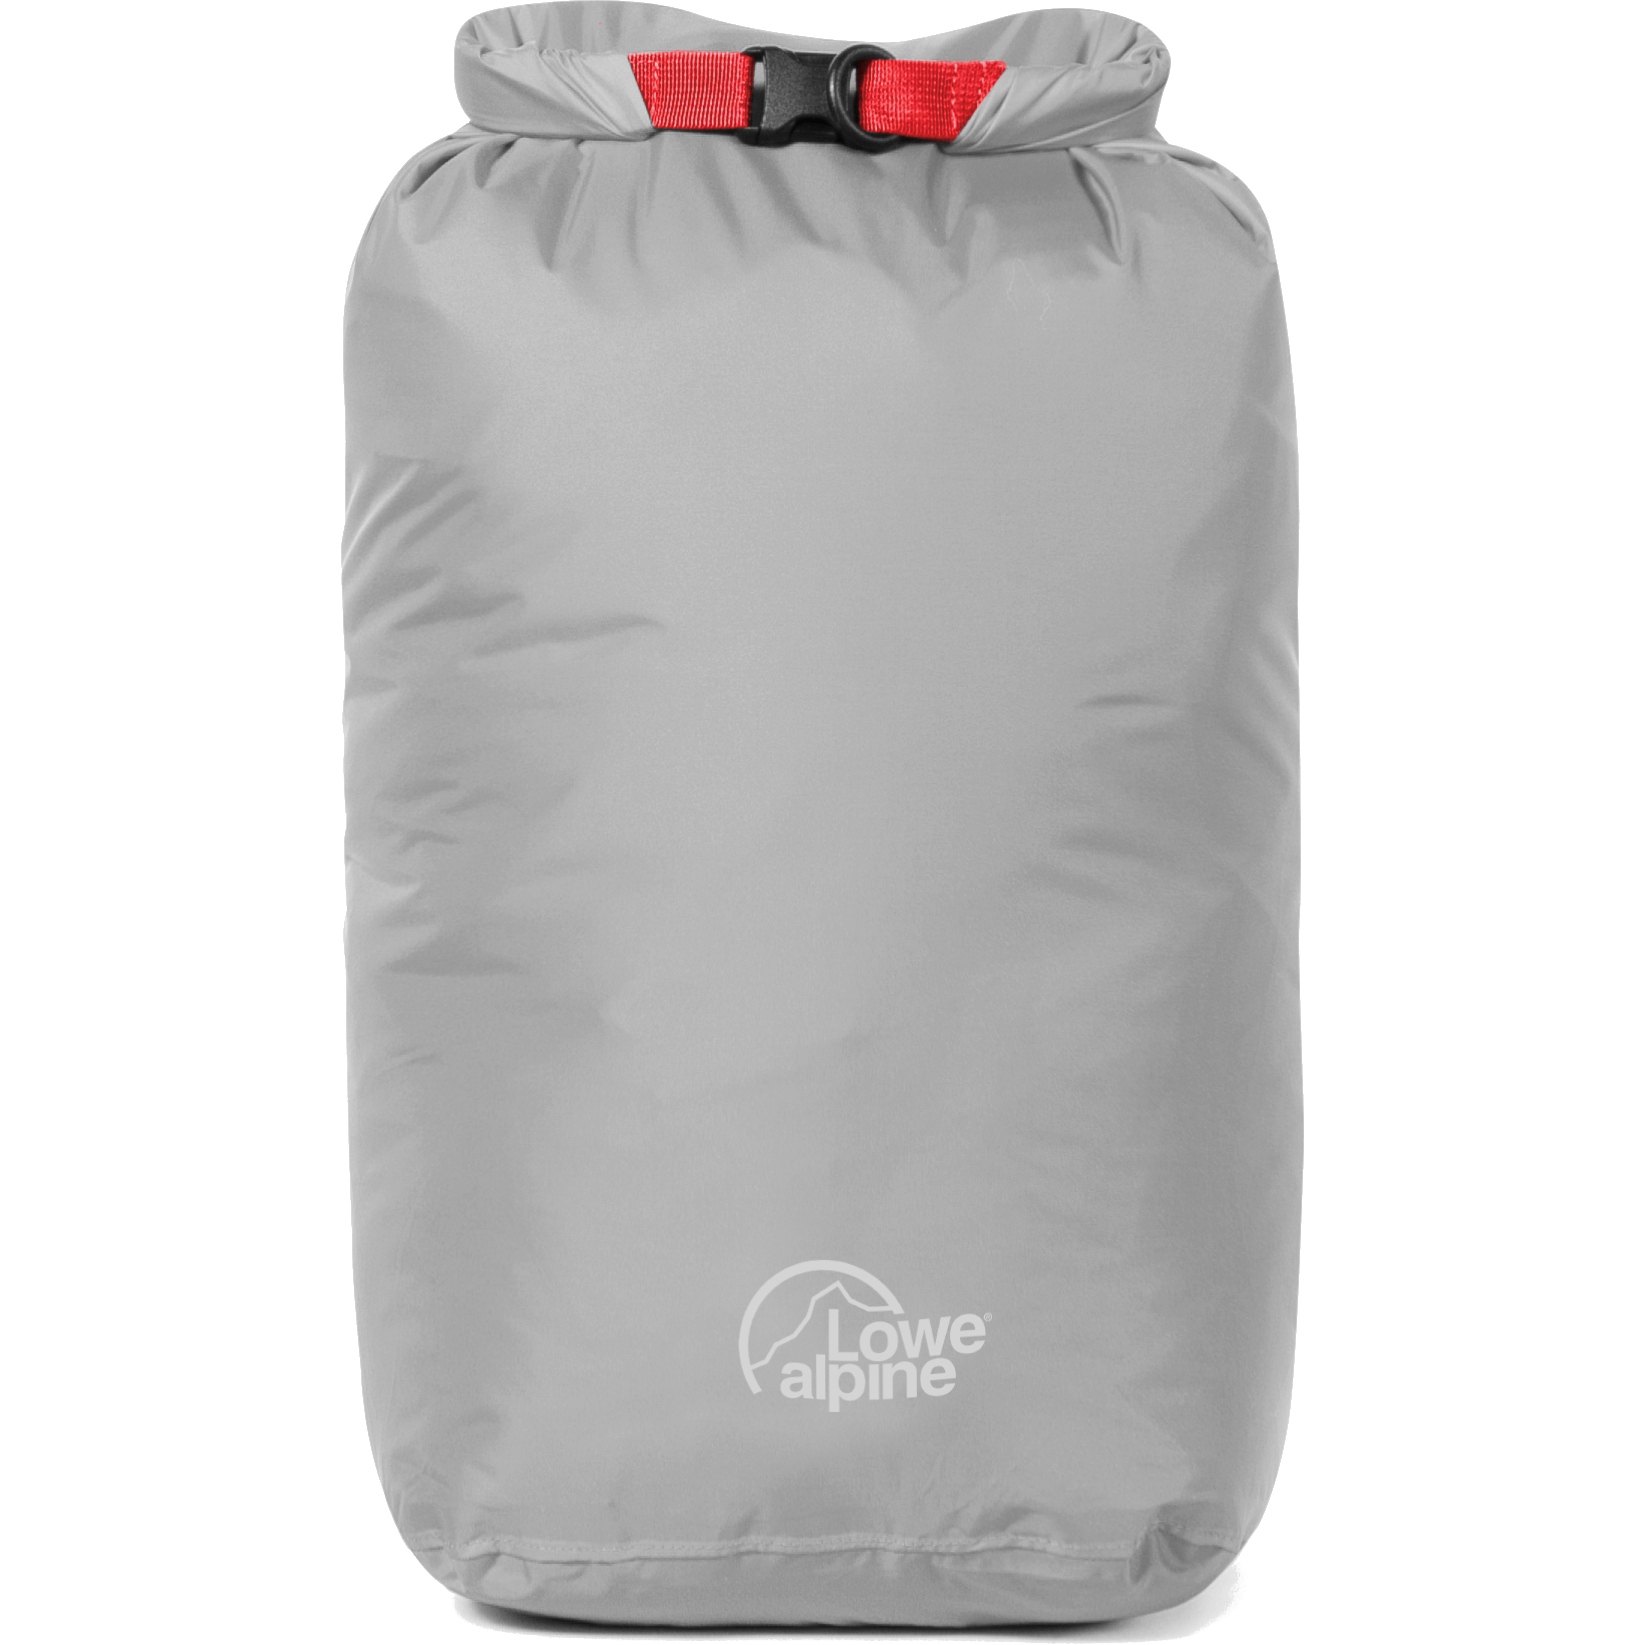 Productfoto van Lowe Alpine Ultralite - Dry Bag - 15L